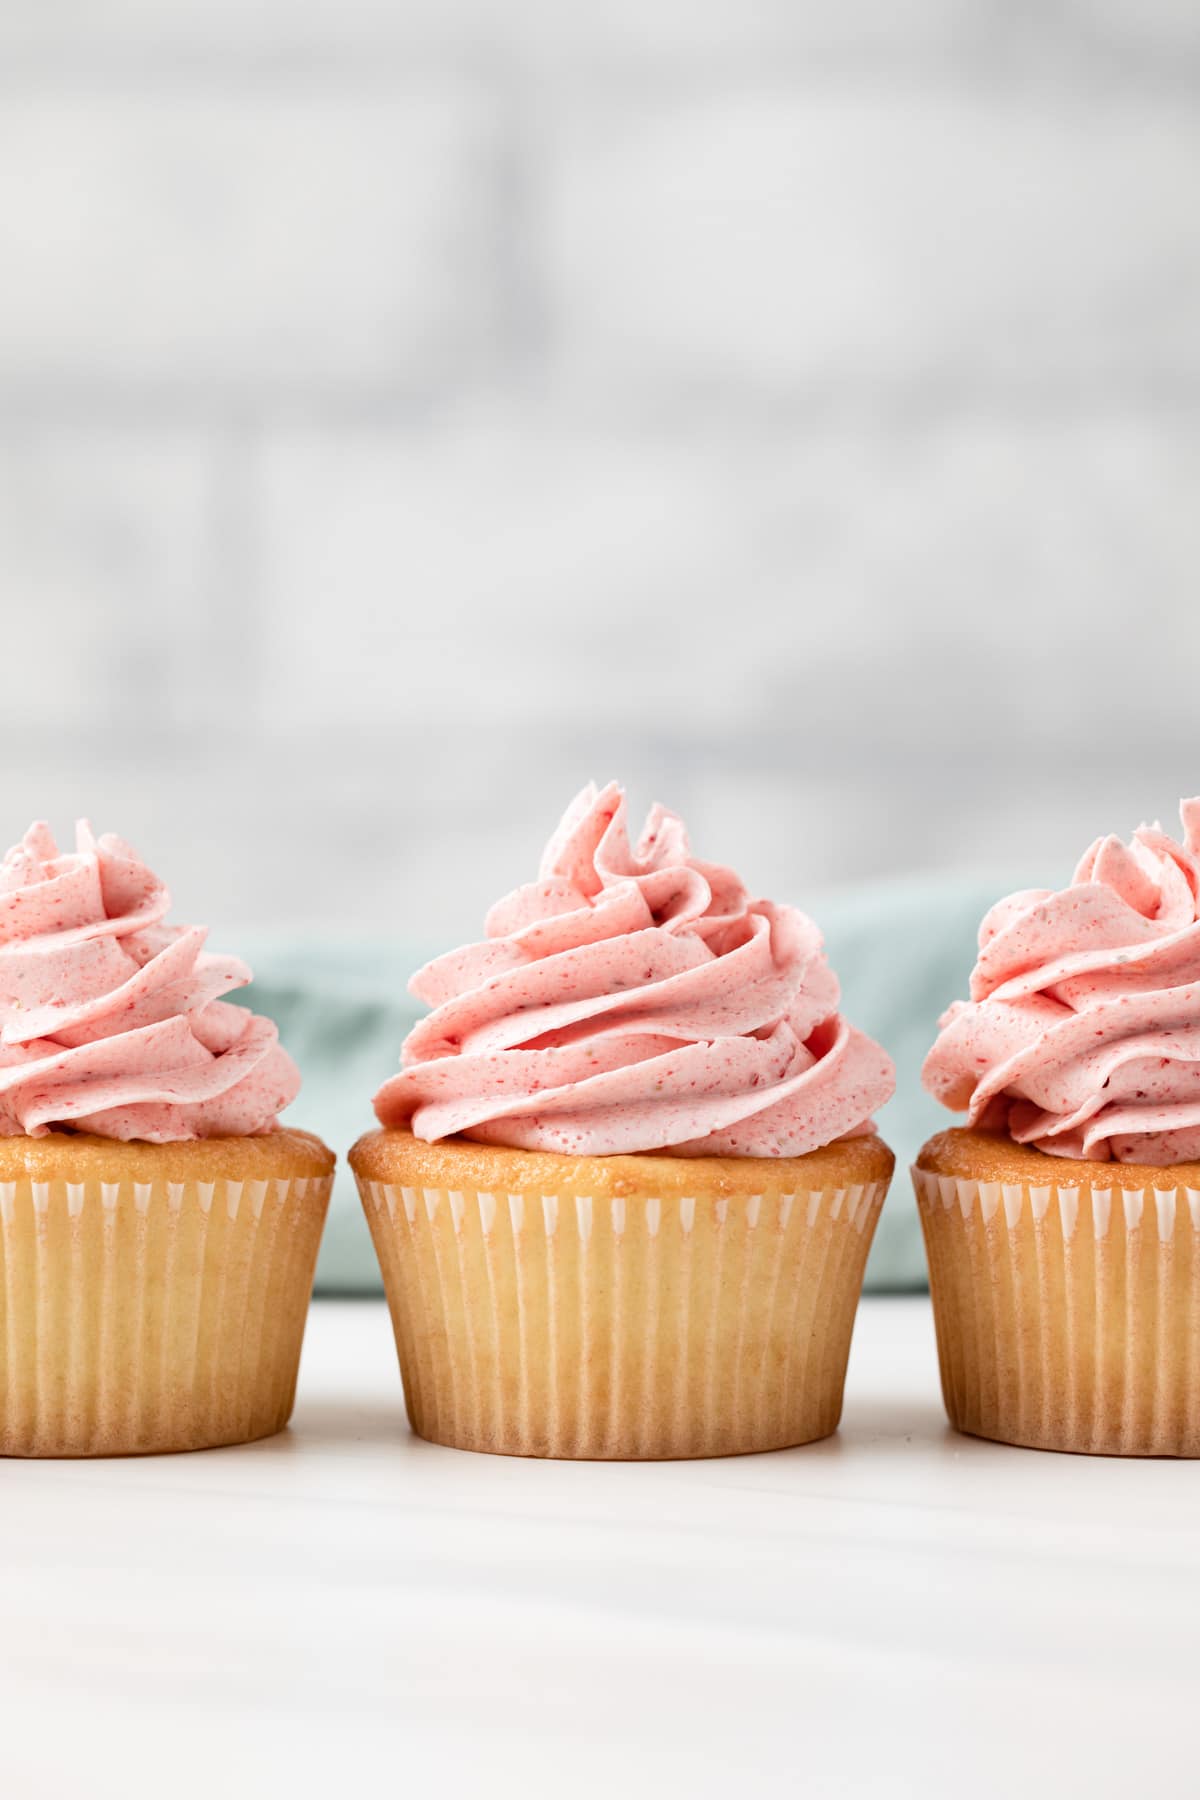 strawberry frosting swirled on three vanilla cupcakes